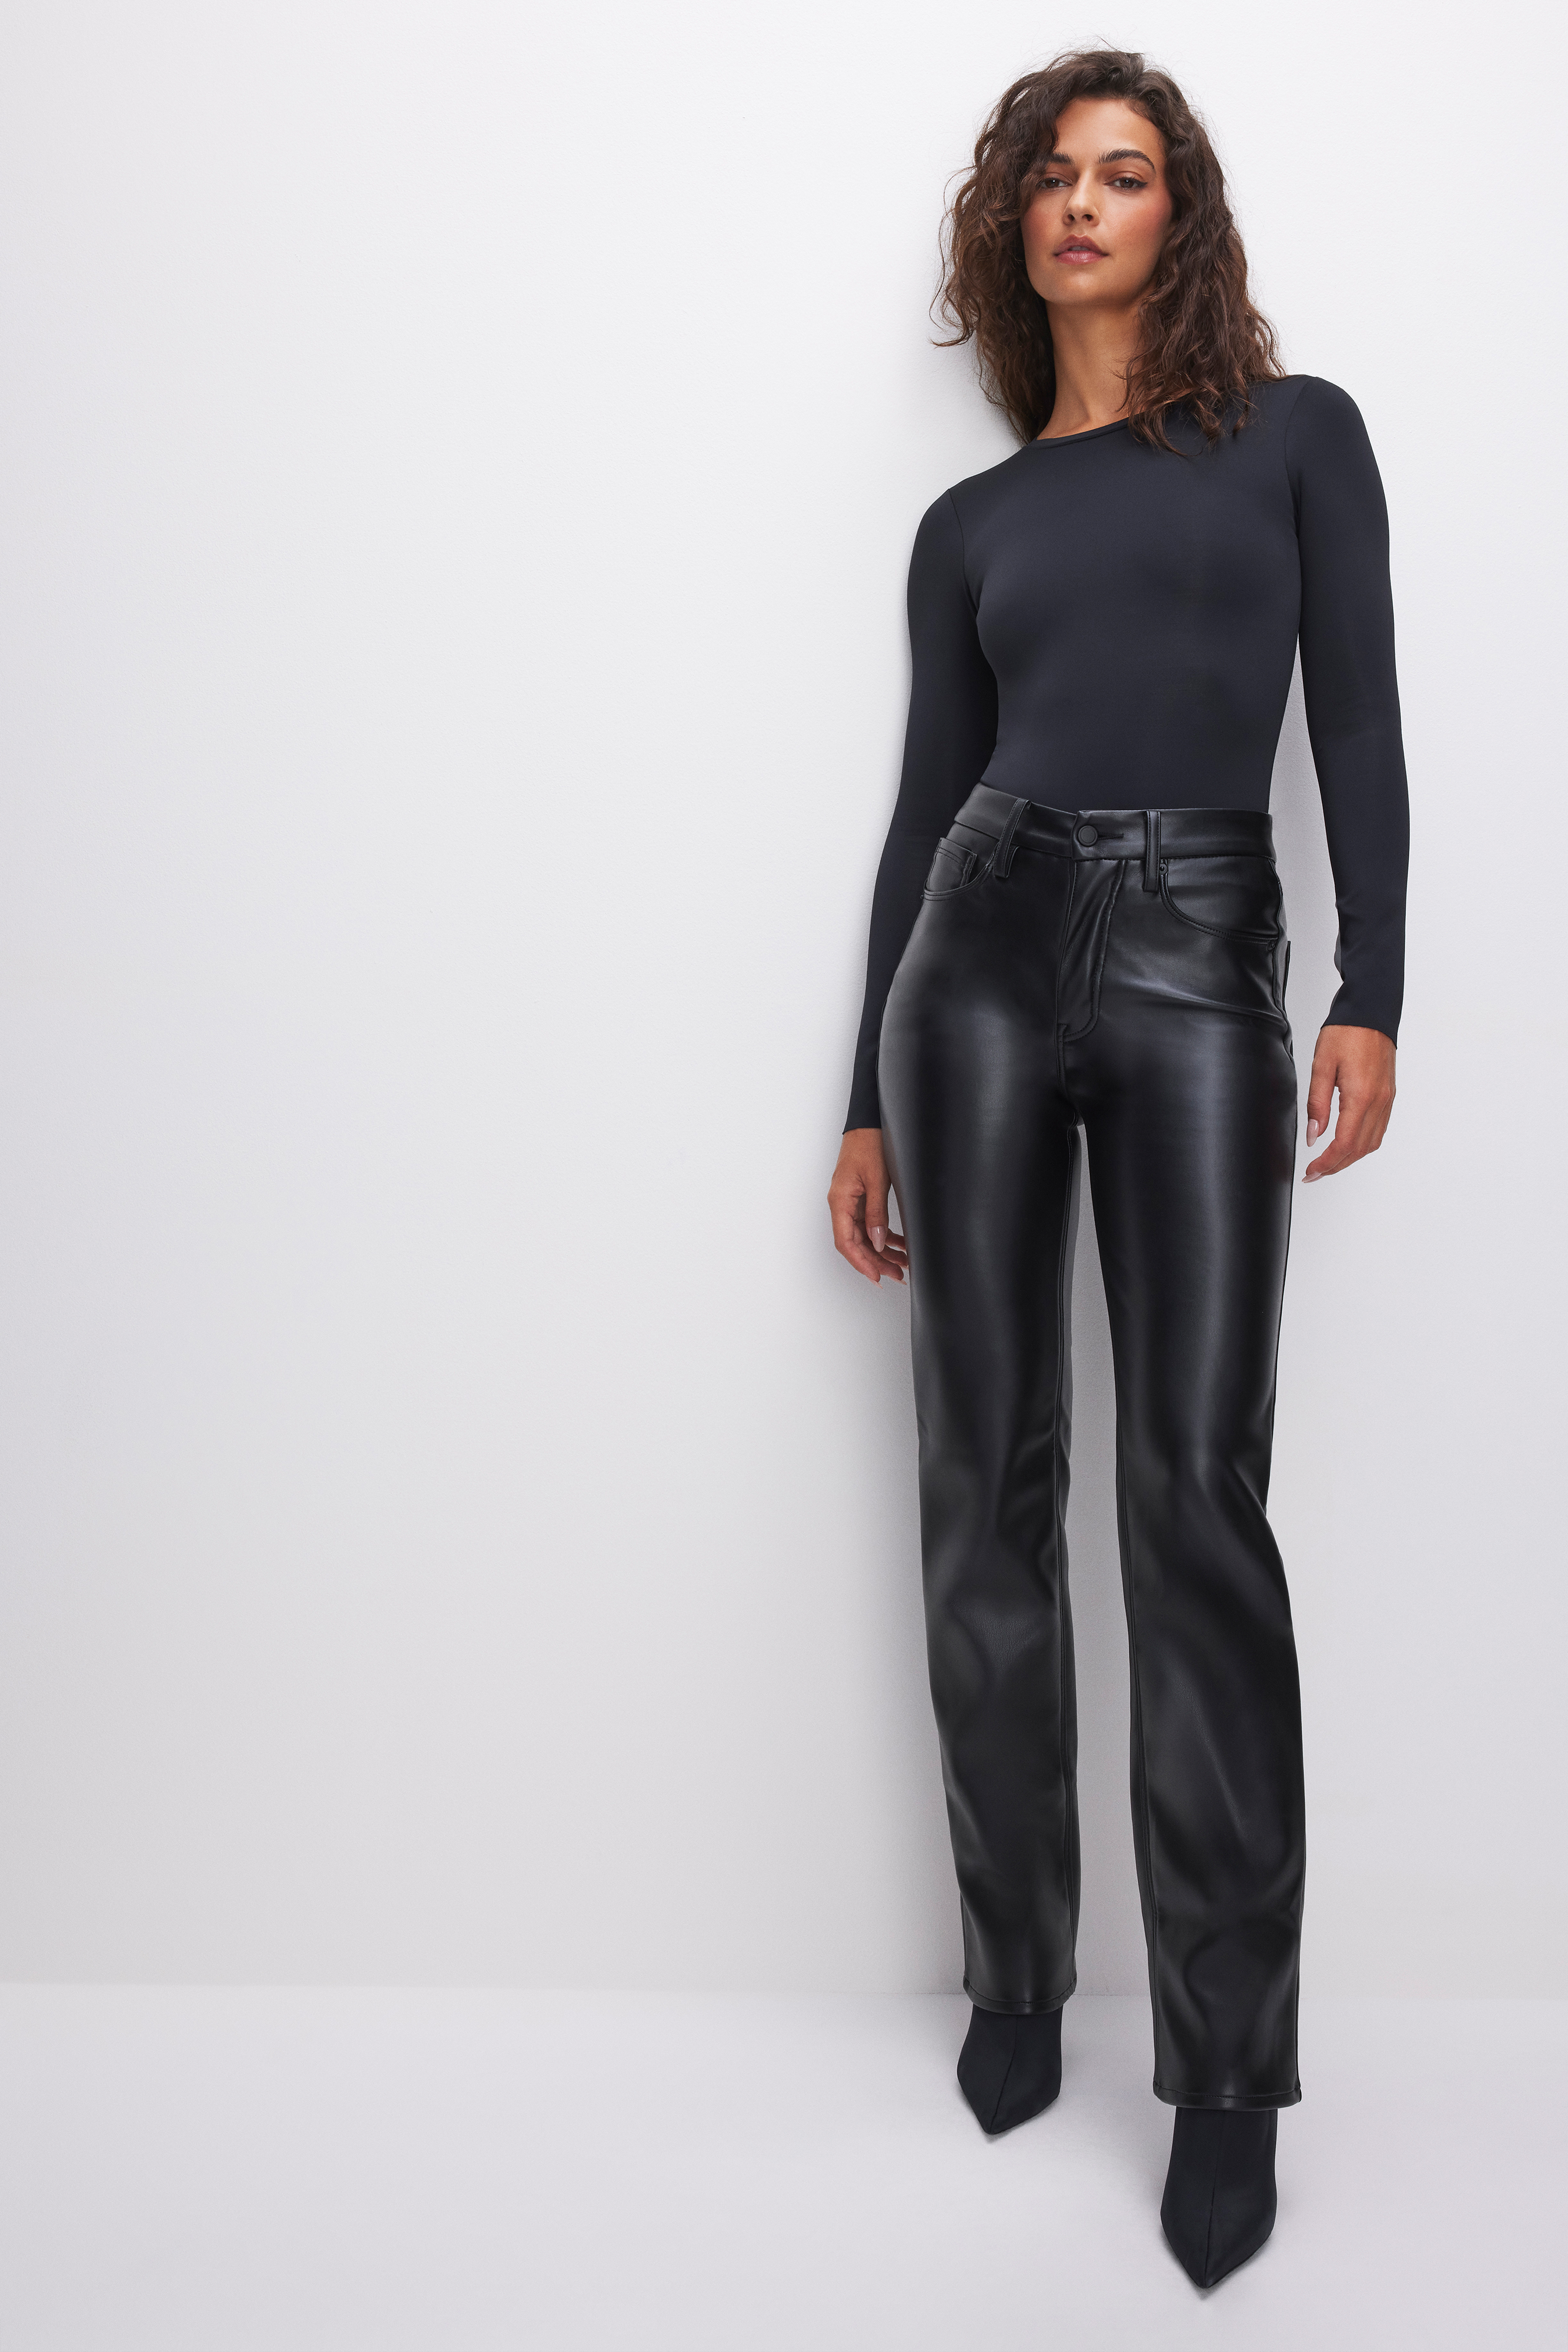 leather pants, always a good idea 🖤📸☑️